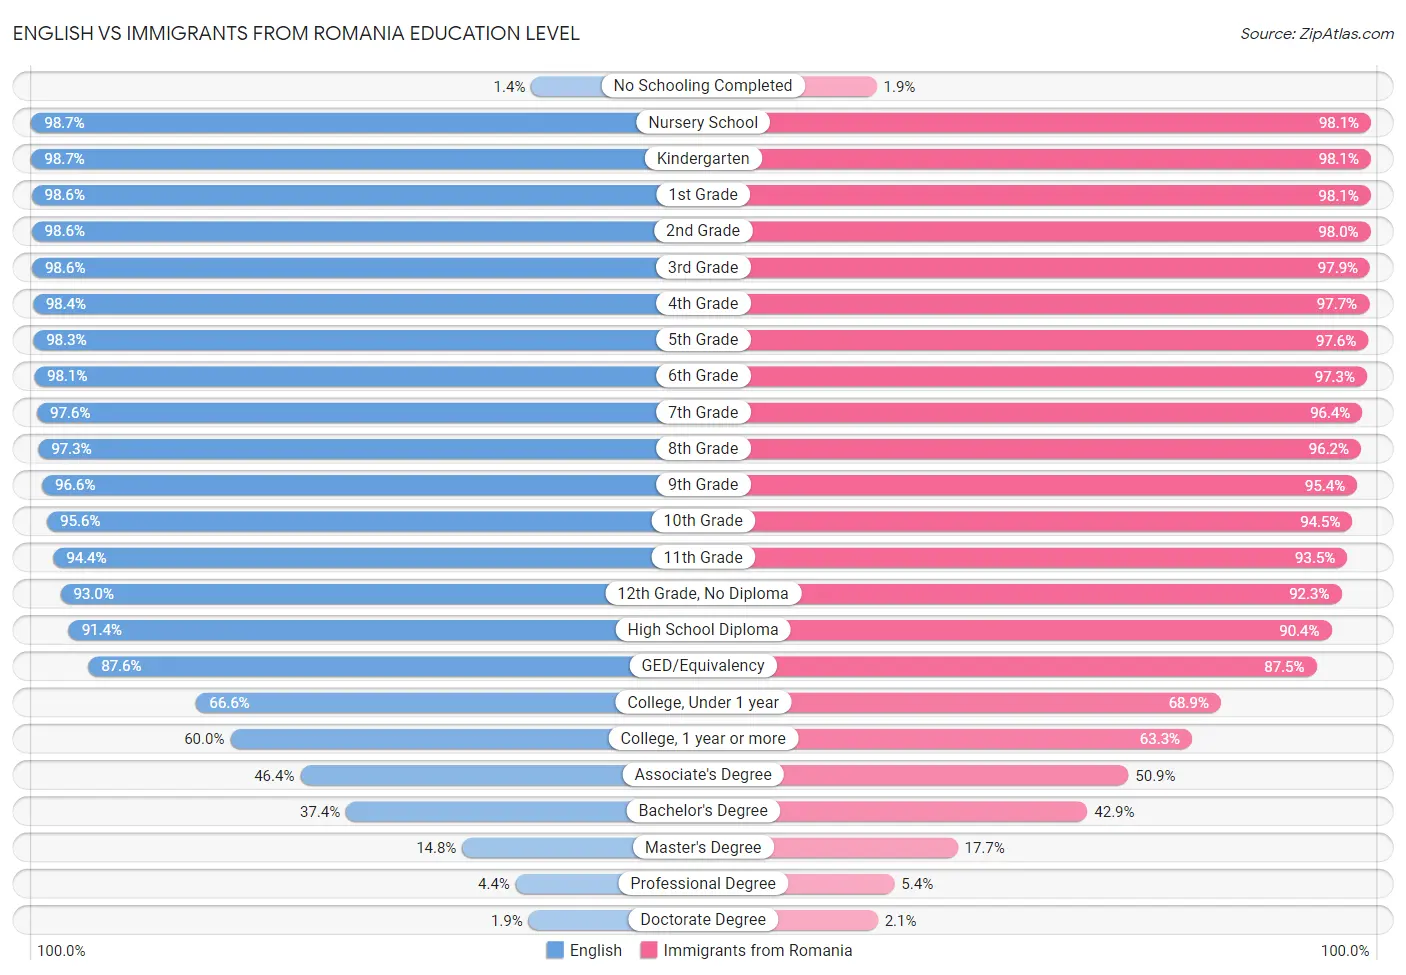 English vs Immigrants from Romania Education Level